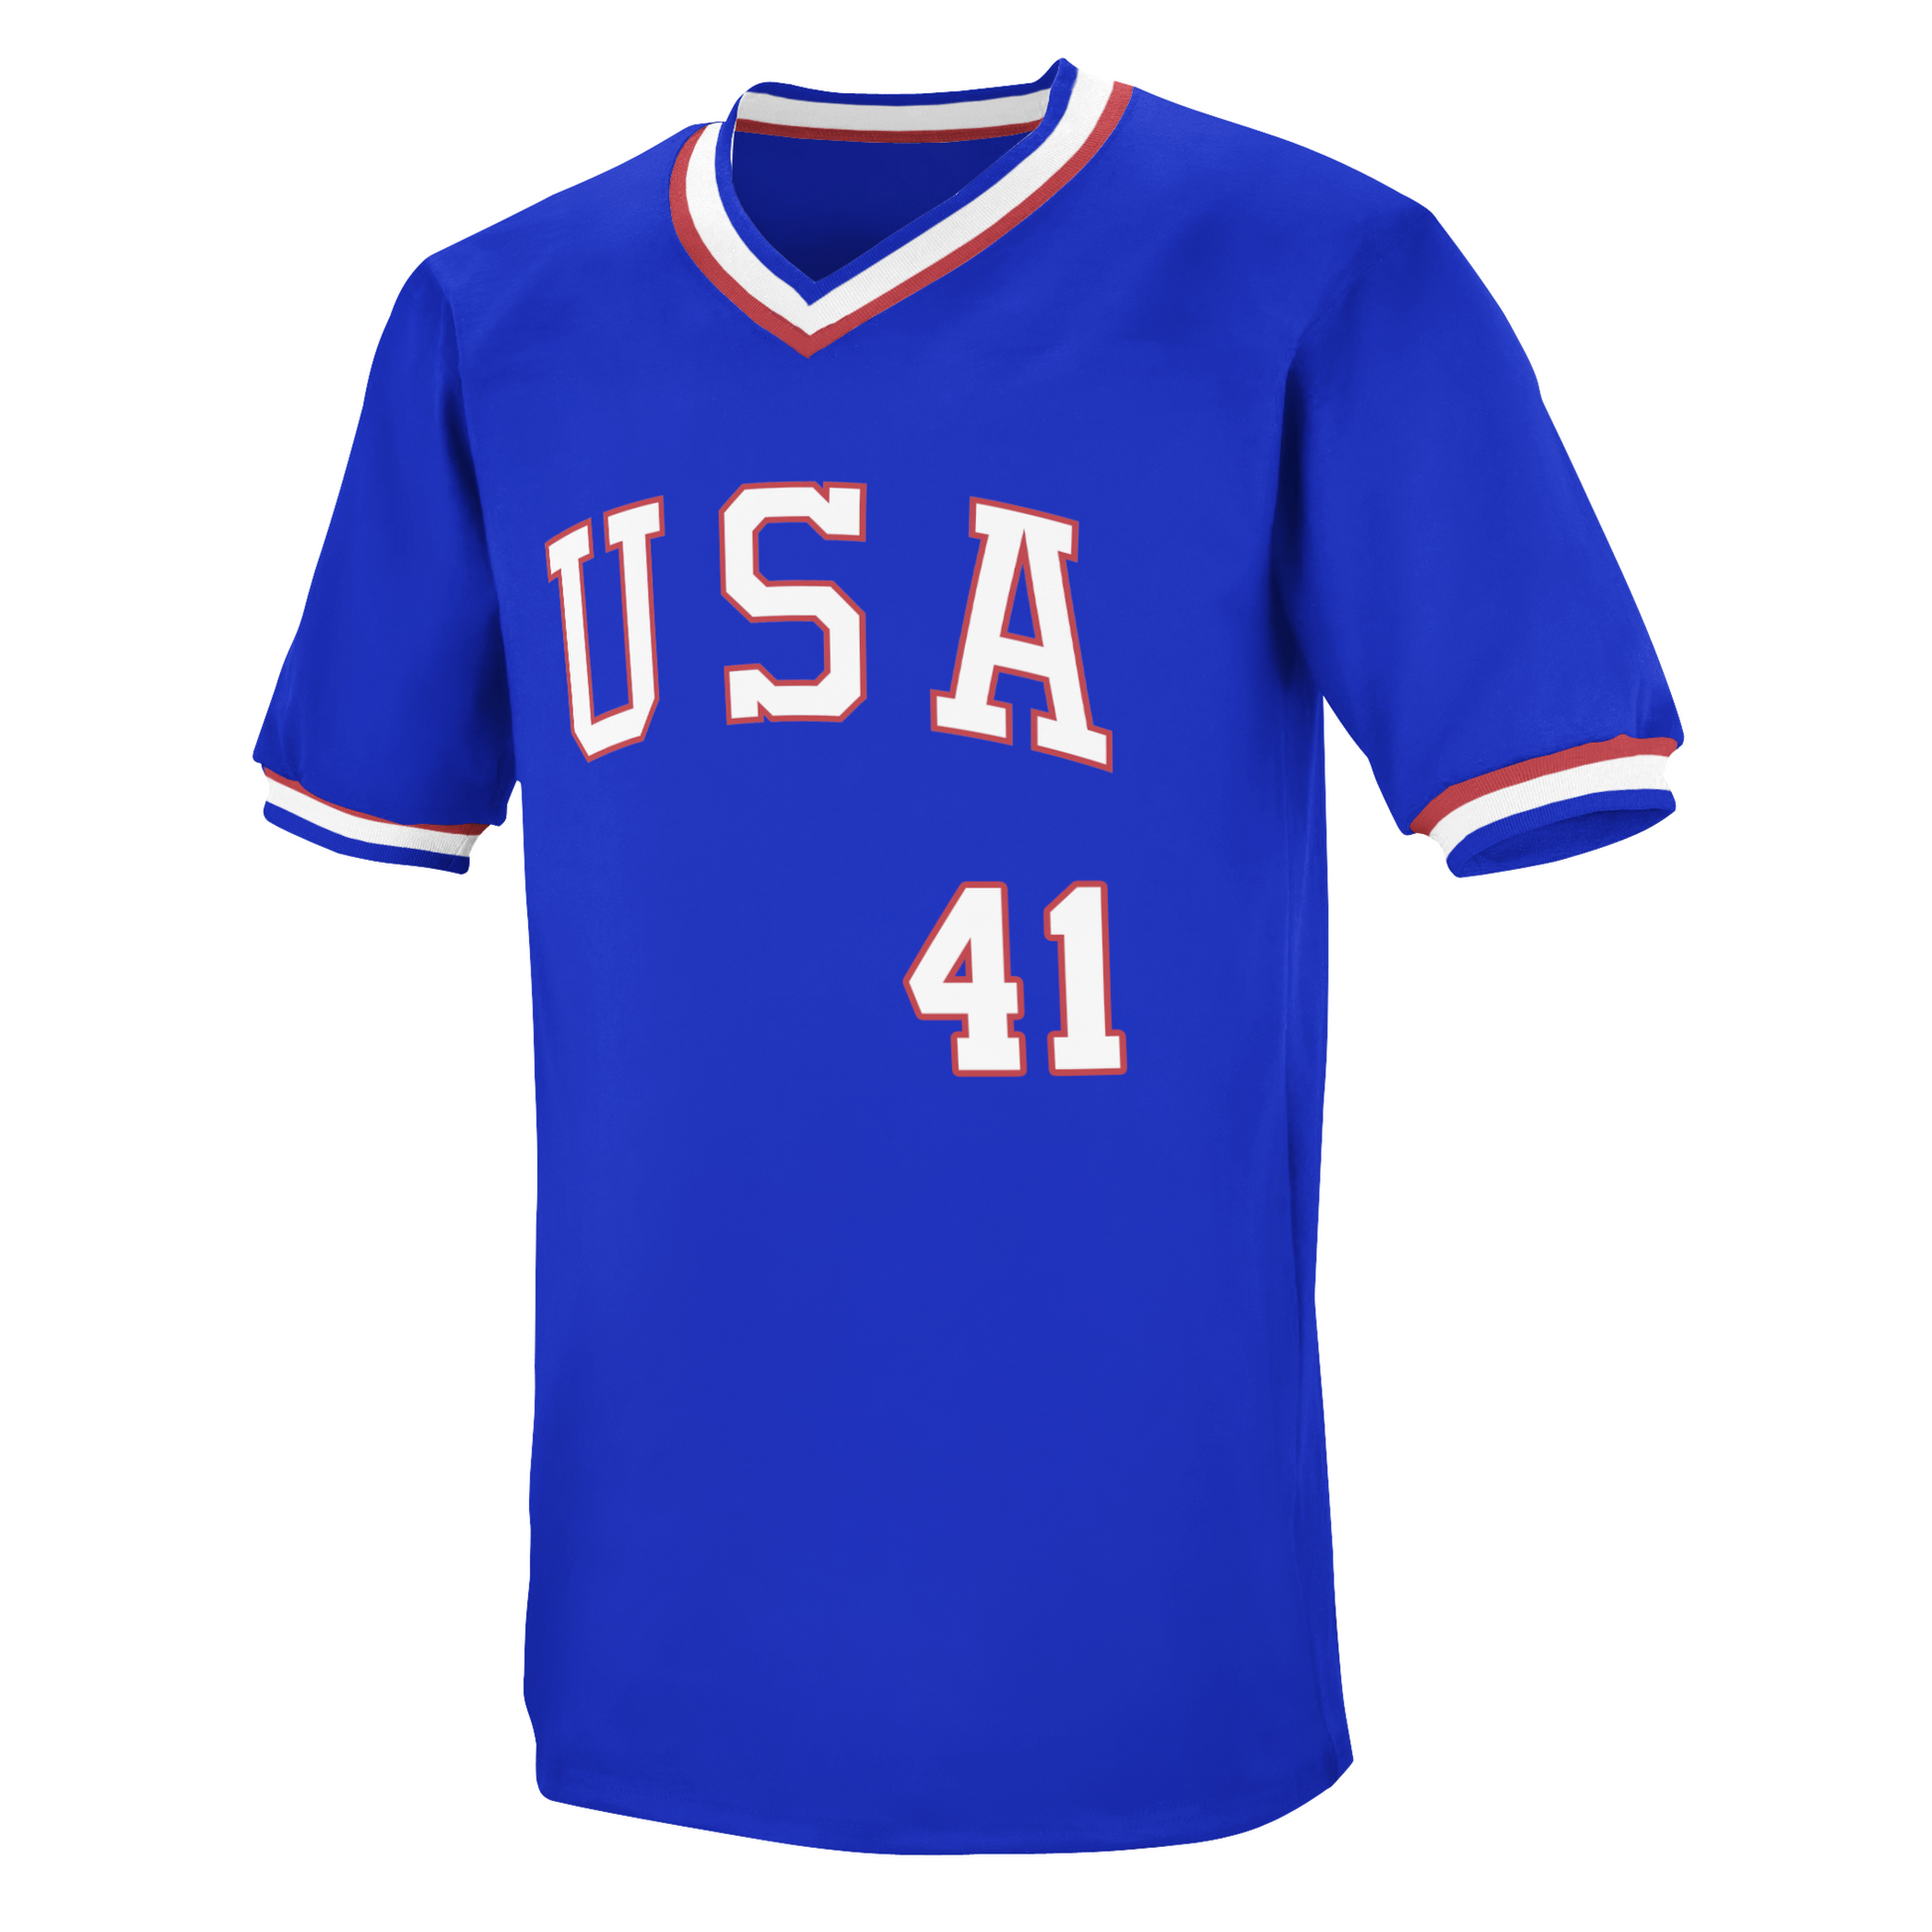 Vintage Royals Wilson Baseball Jersey Size 42 Made USA Sewn